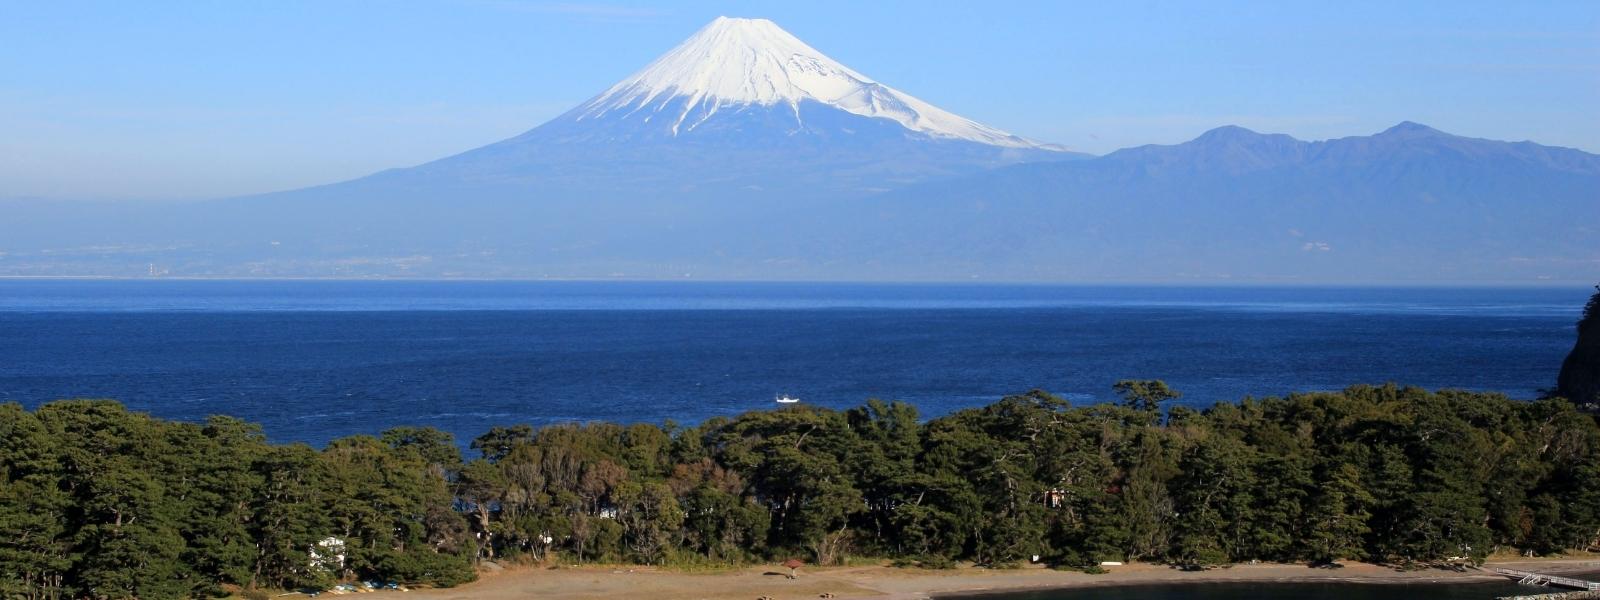 Vue du Mont Fuji depuis la péninsule d'Izu